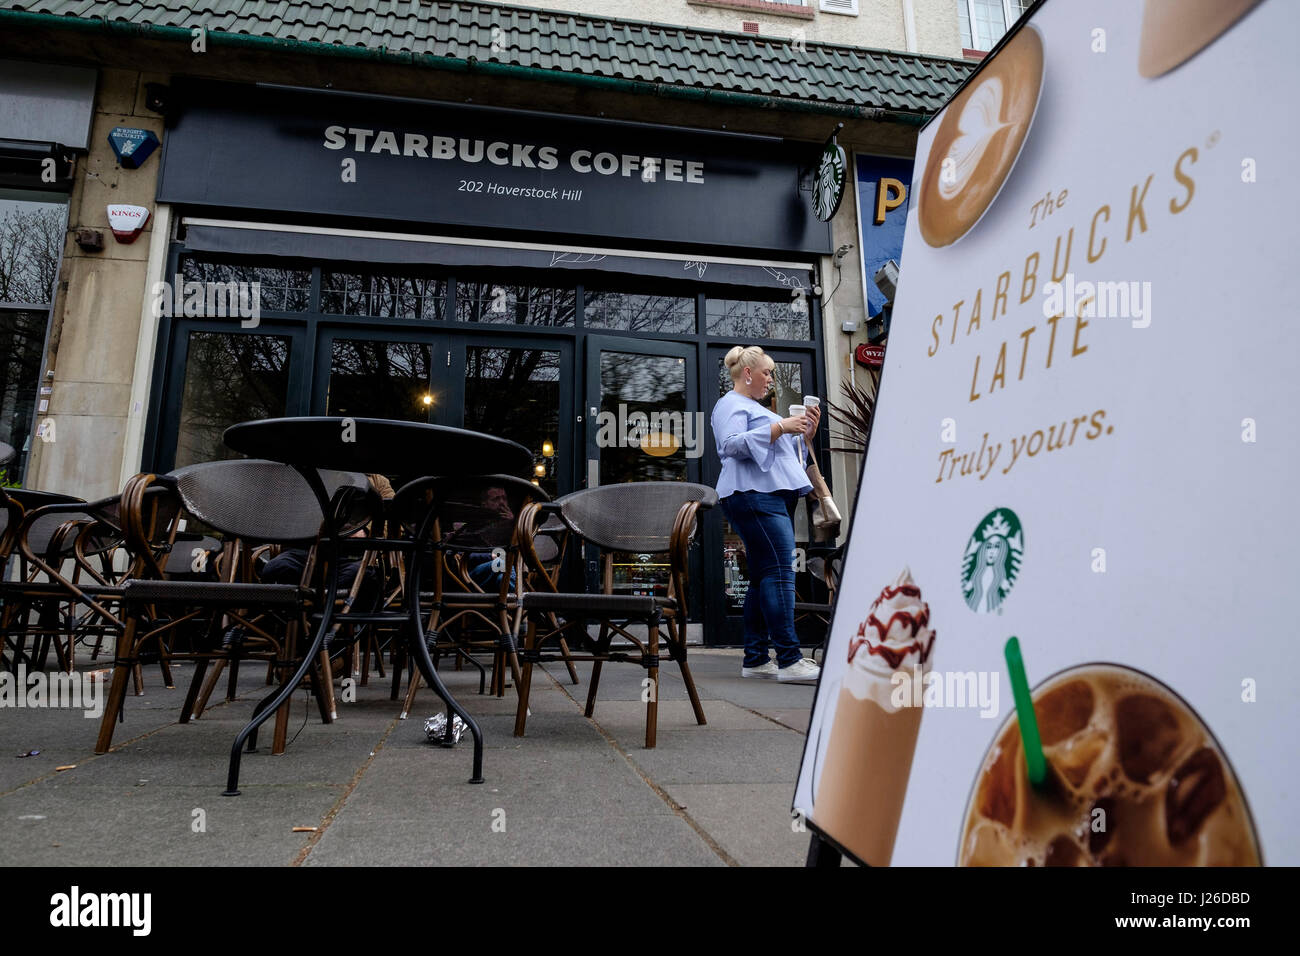 Starbucks coffee shop in 202 Haverstock Hill, London, England, UK, Europe Stock Photo